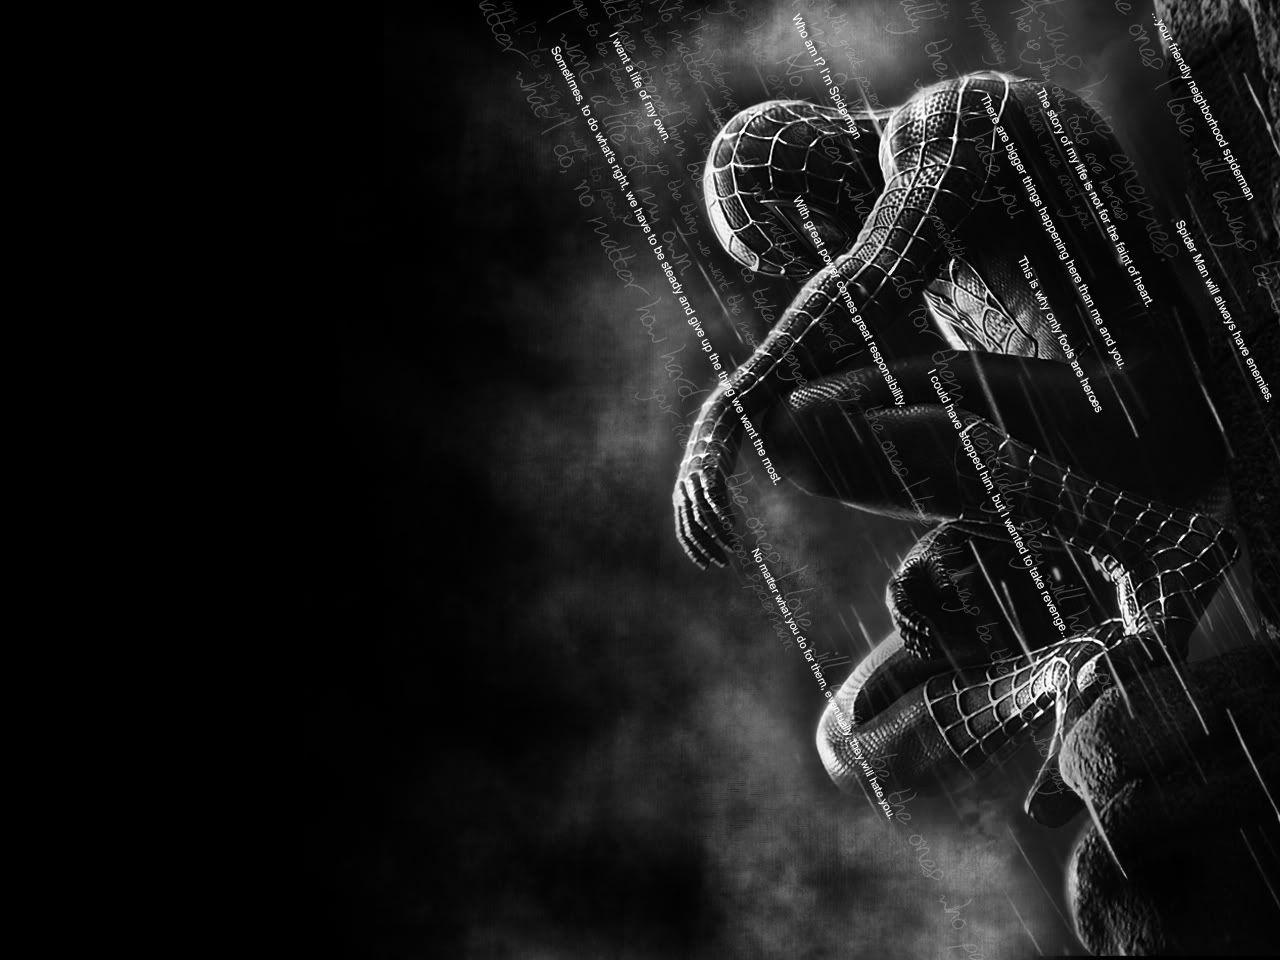 Dark Spider Man Wallpapers - Wallpaper Cave